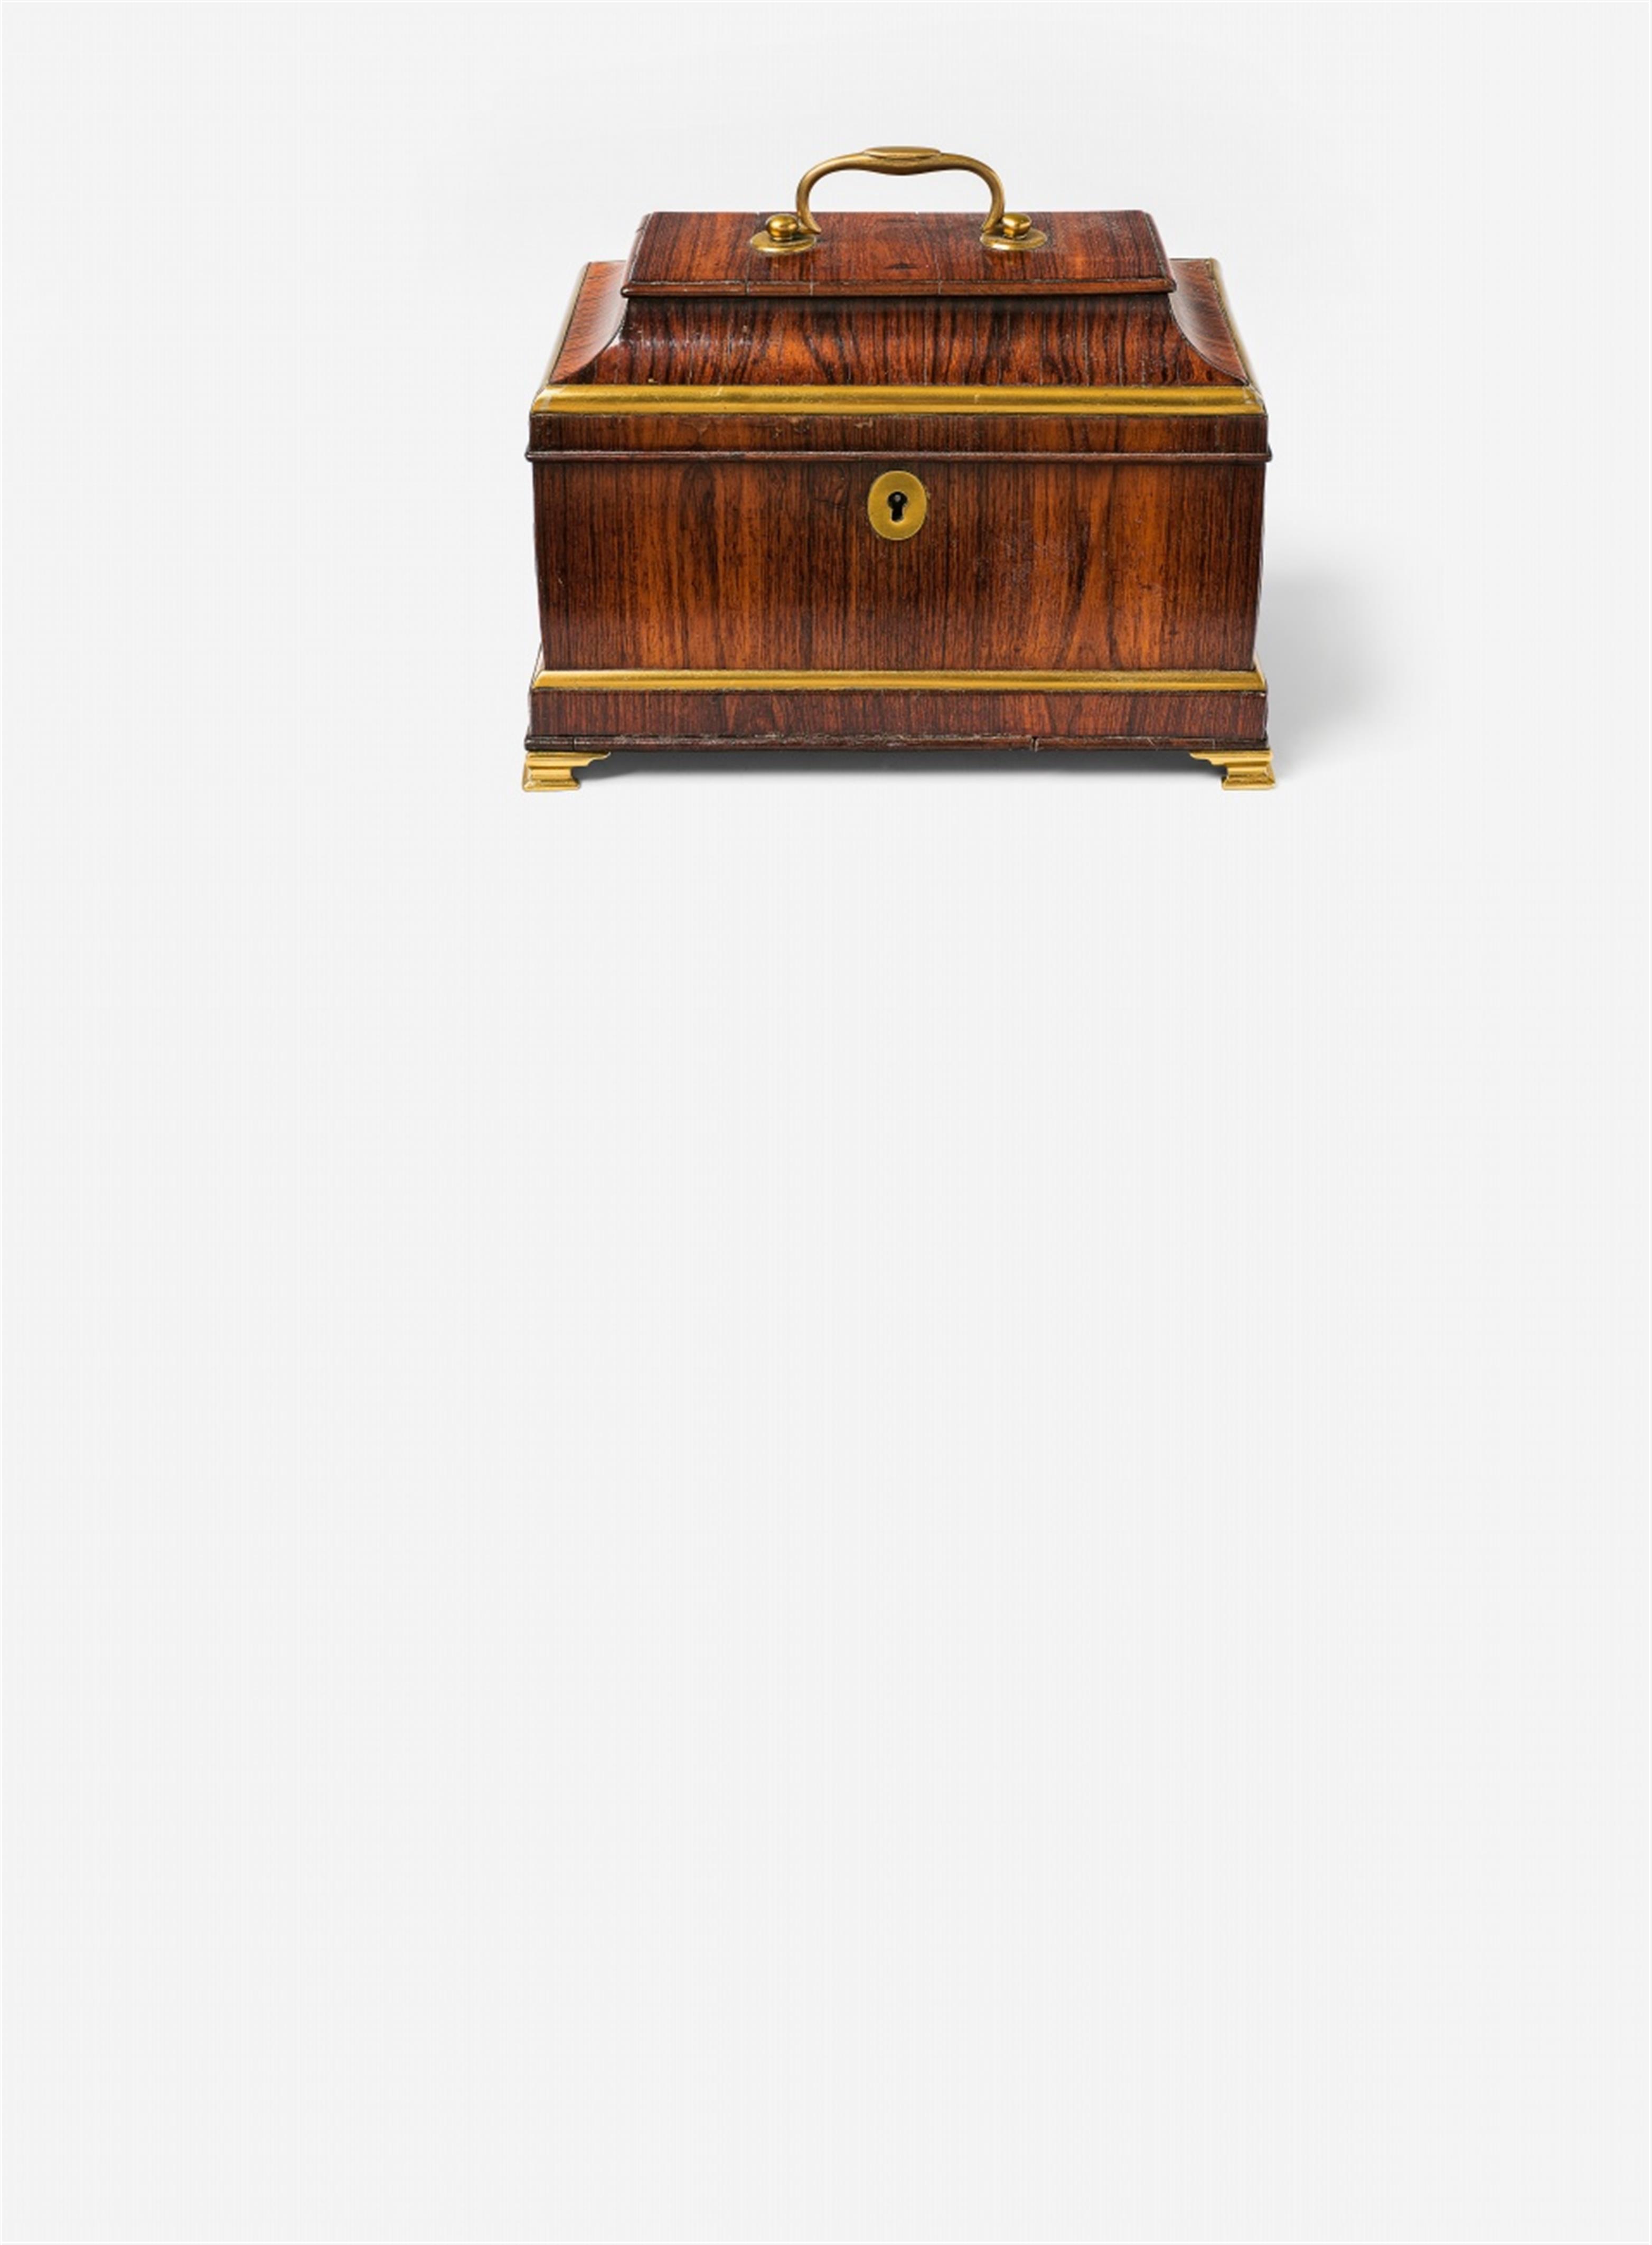 A tea caddy by Abraham Roentgen - image-2